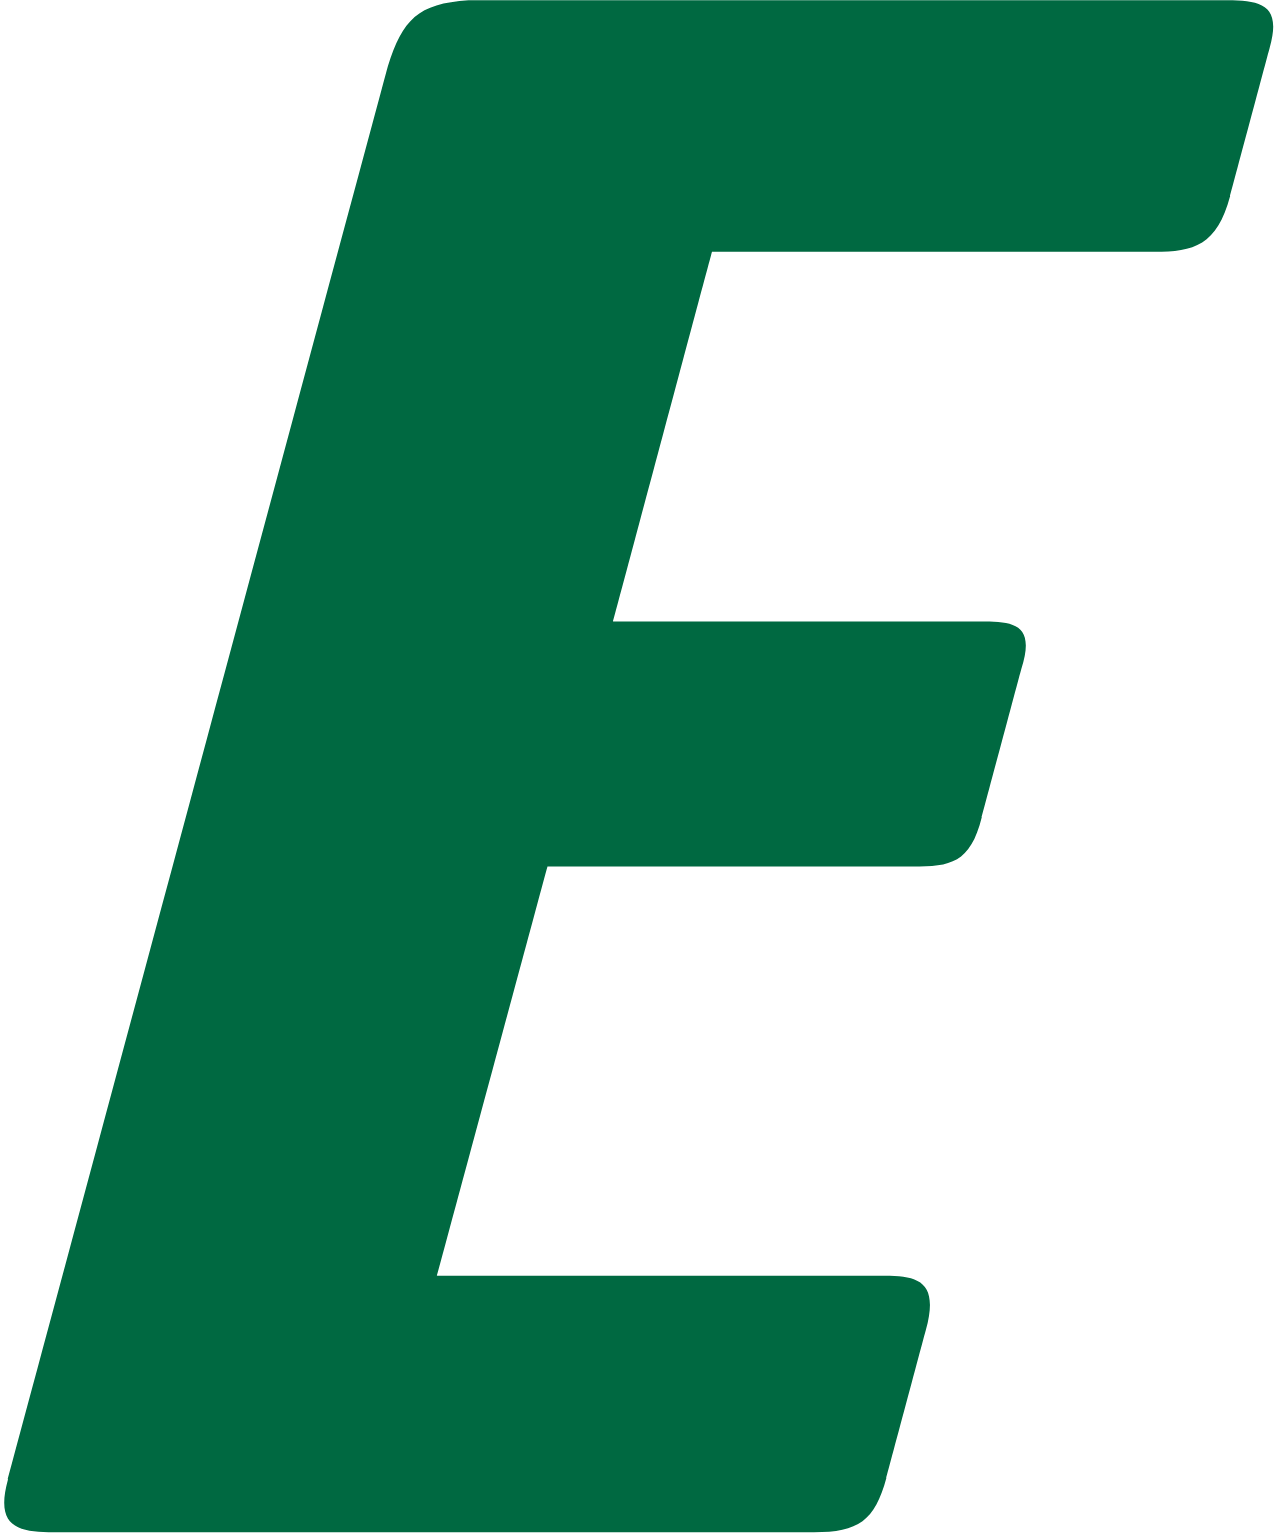 Europris logo (PNG transparent)